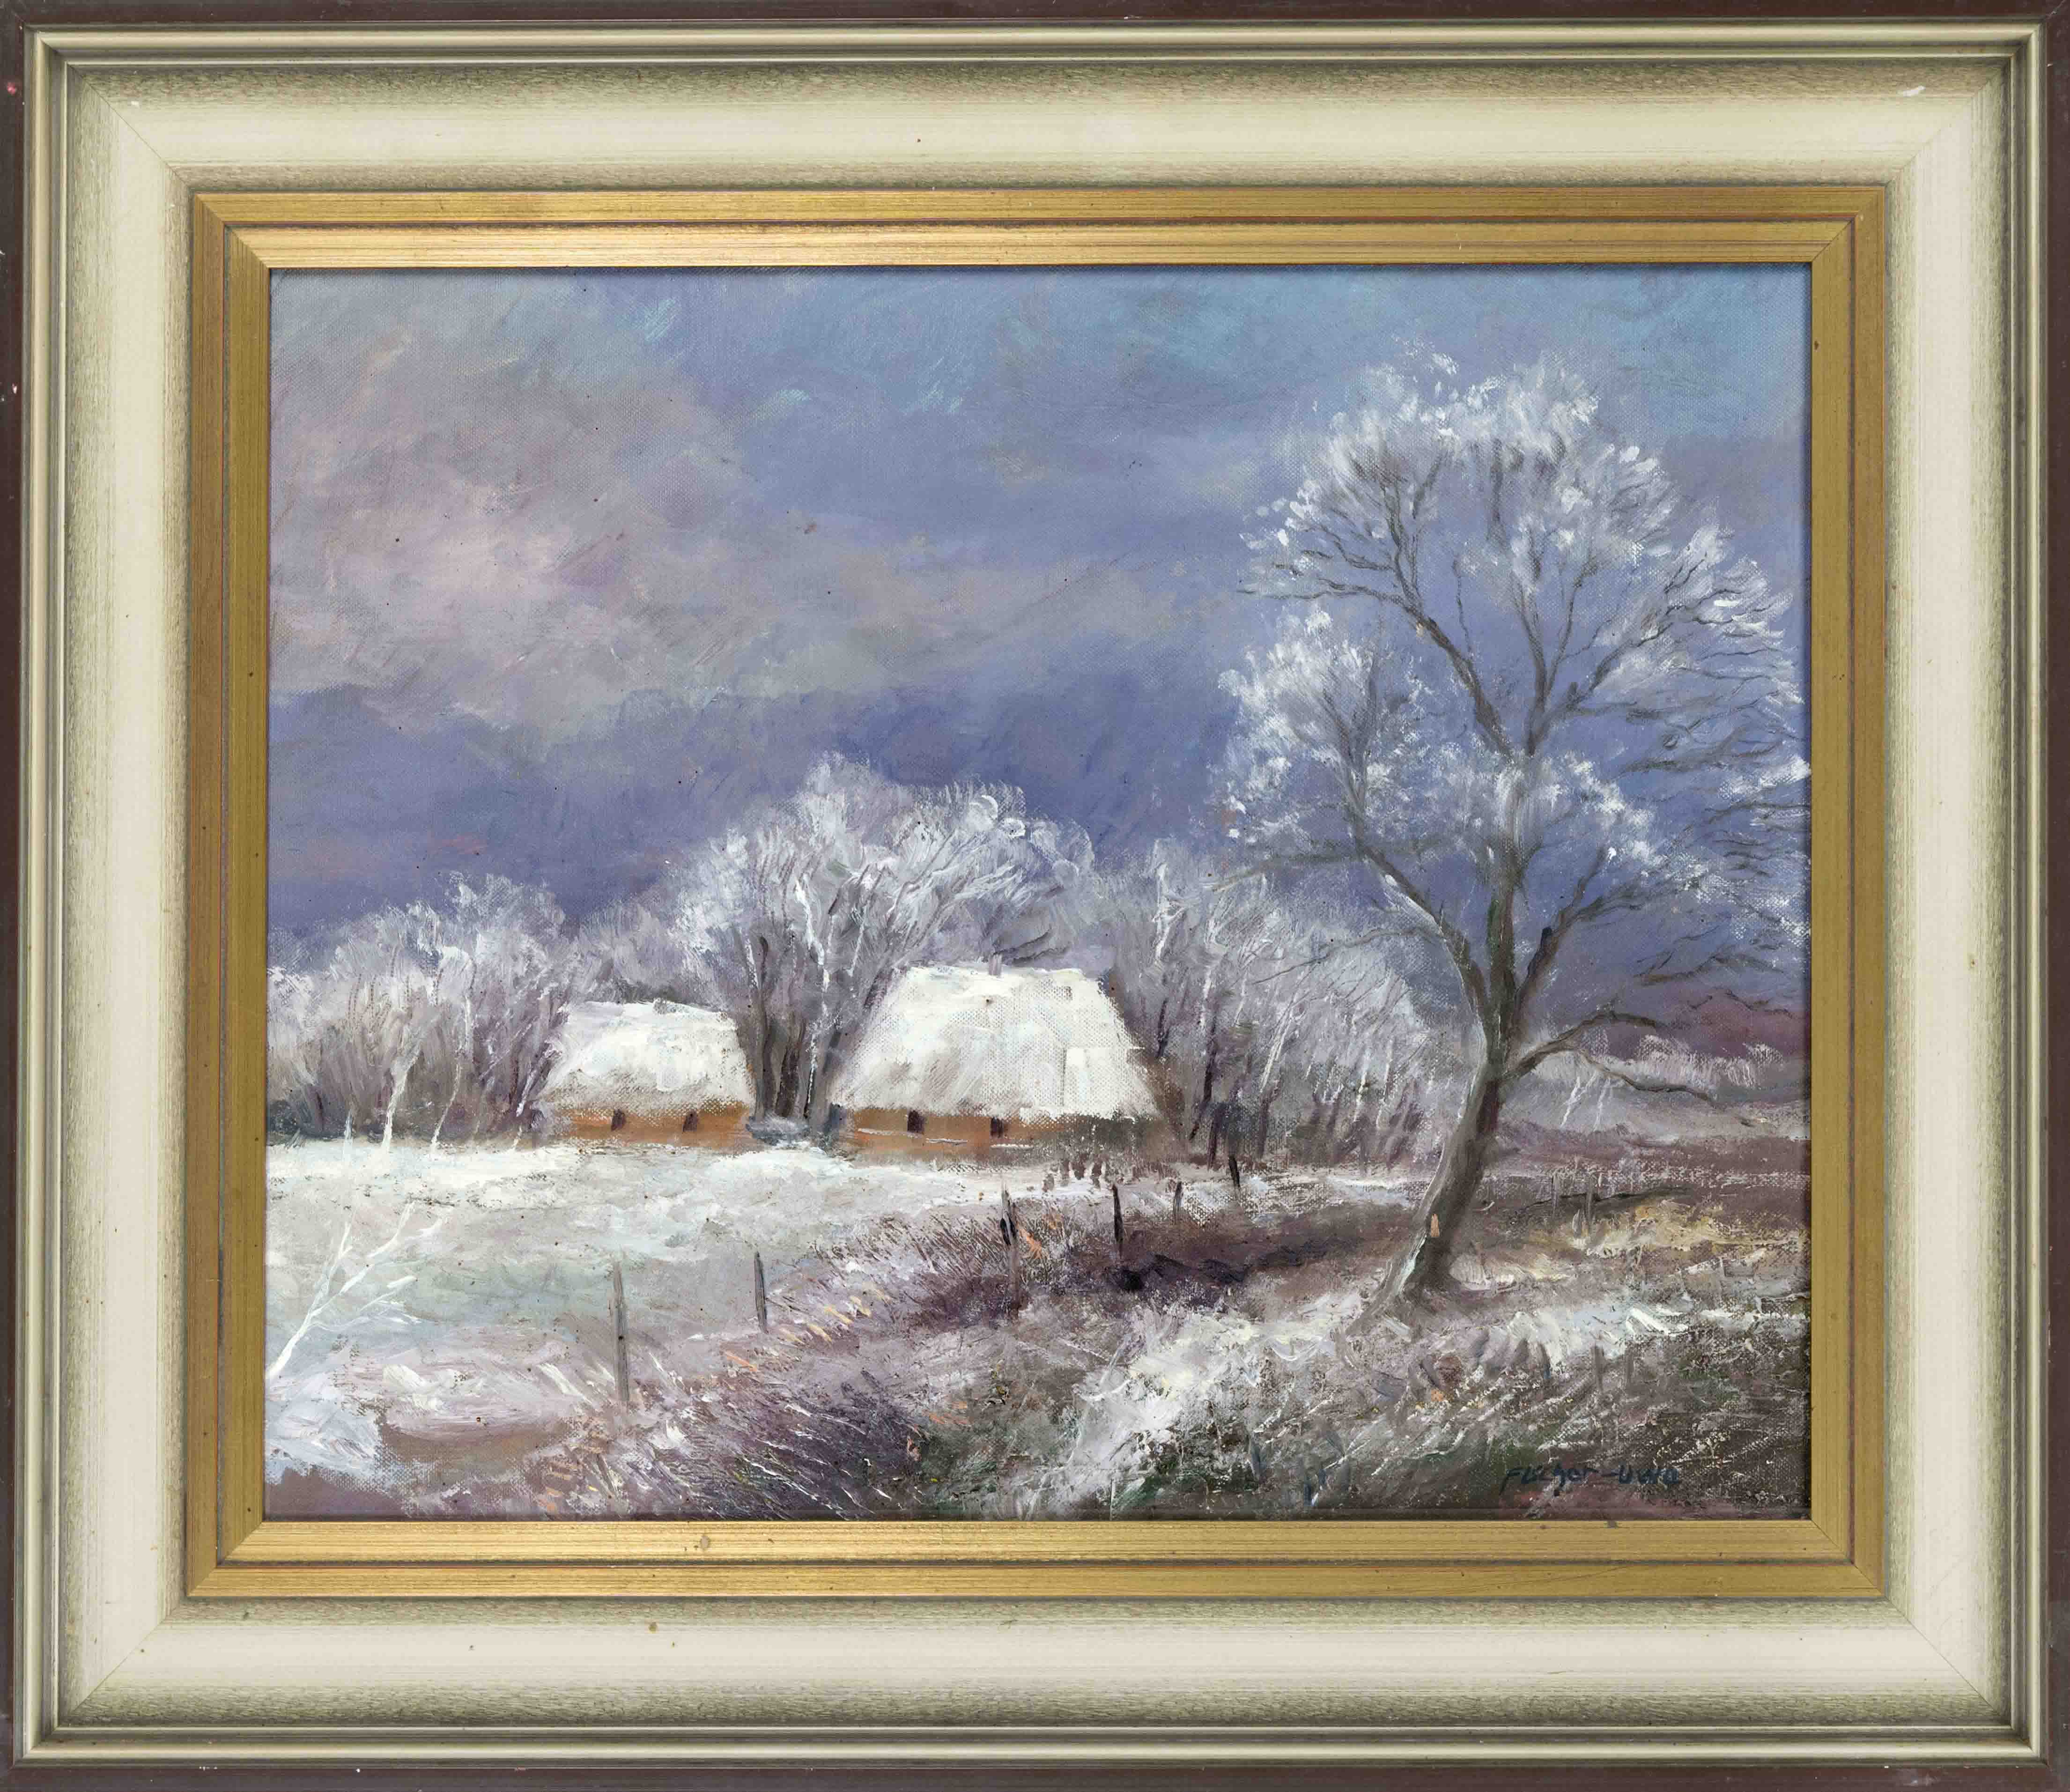 Bruno Fischer-Uwe (1915-1992), Worpswede painter, snowy winter landscape, oil on canvas, signed